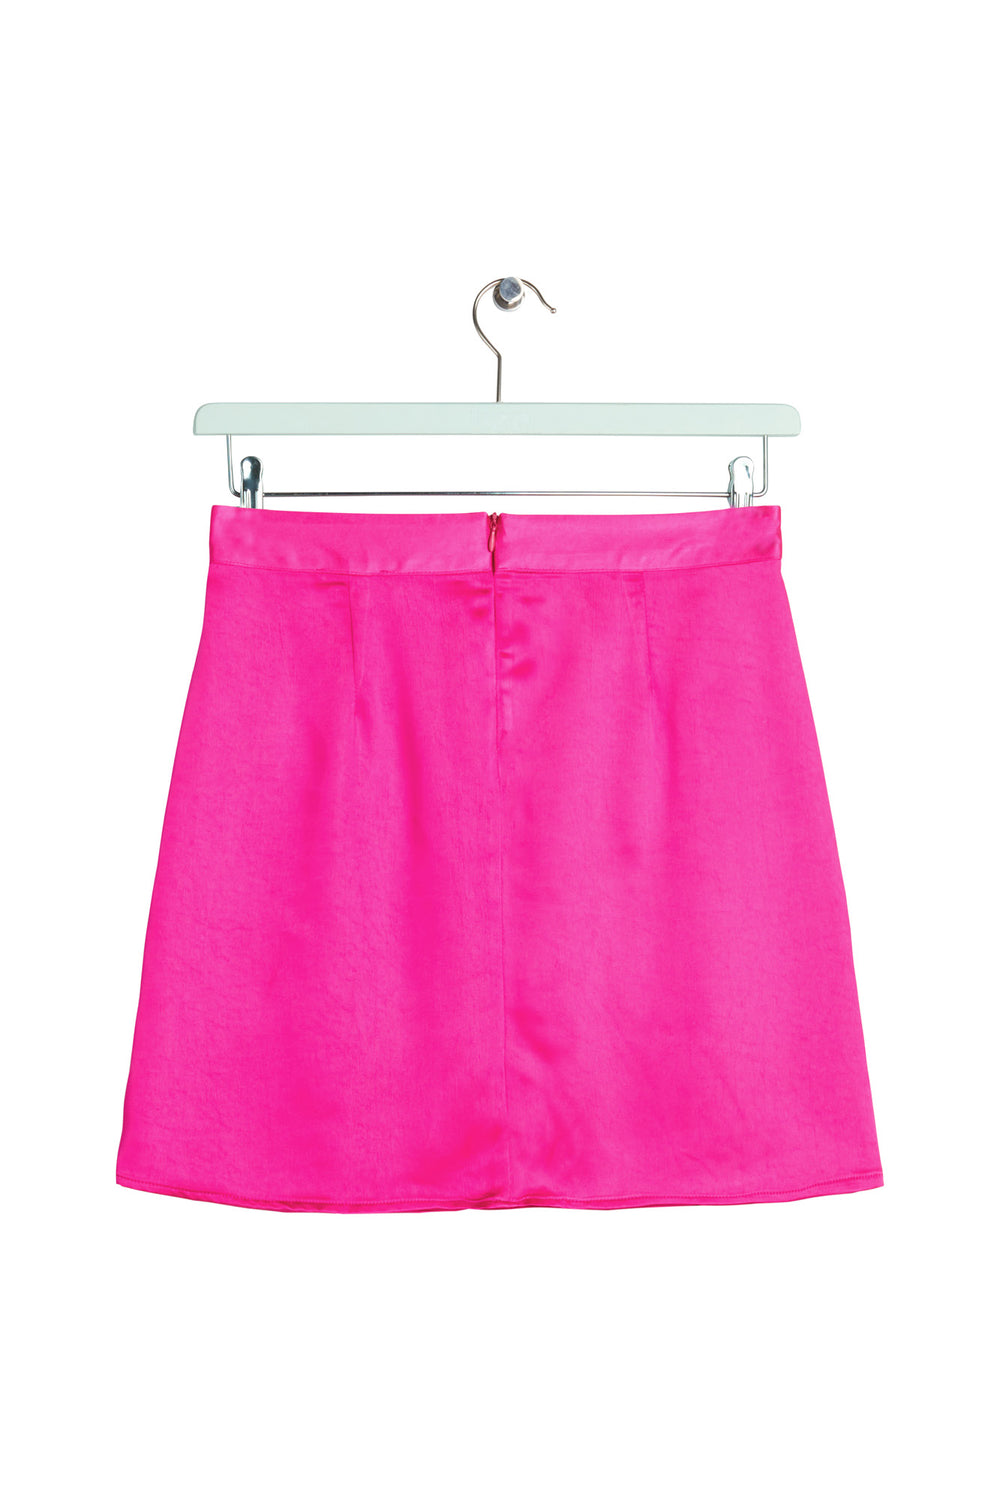 BZR SatinaBZMolanna skirt Skirt Pink